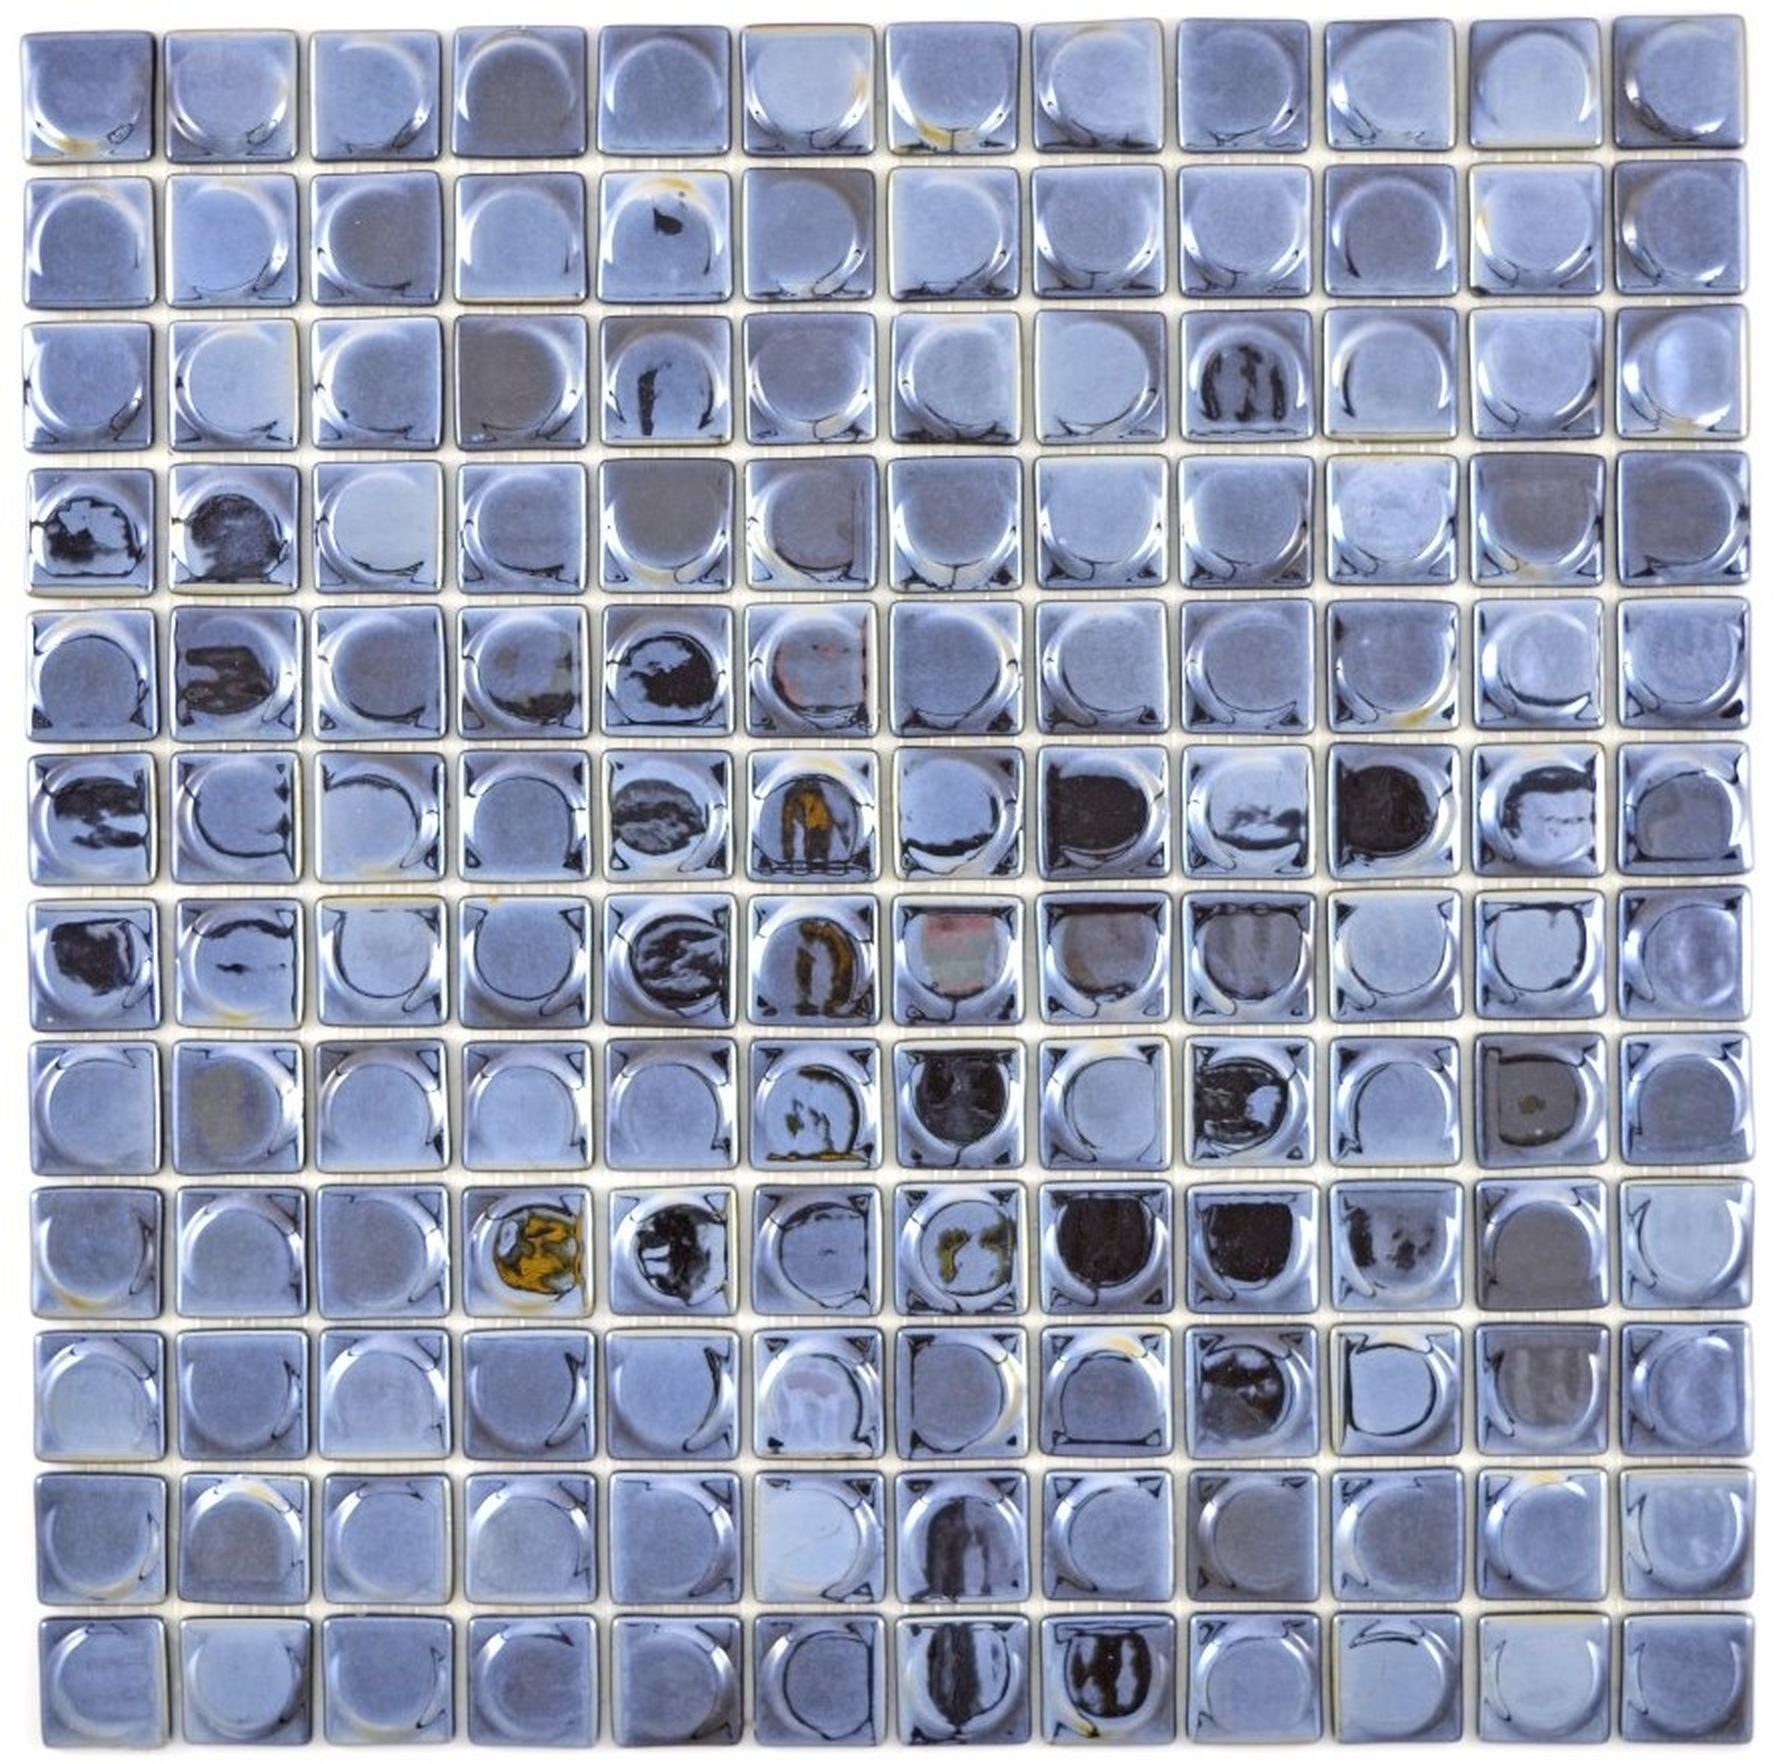 Mosani Mosaikfliesen Glasmosaik Nachhaltiger Wandbelag Fliese Recycling anthrazit schwarz